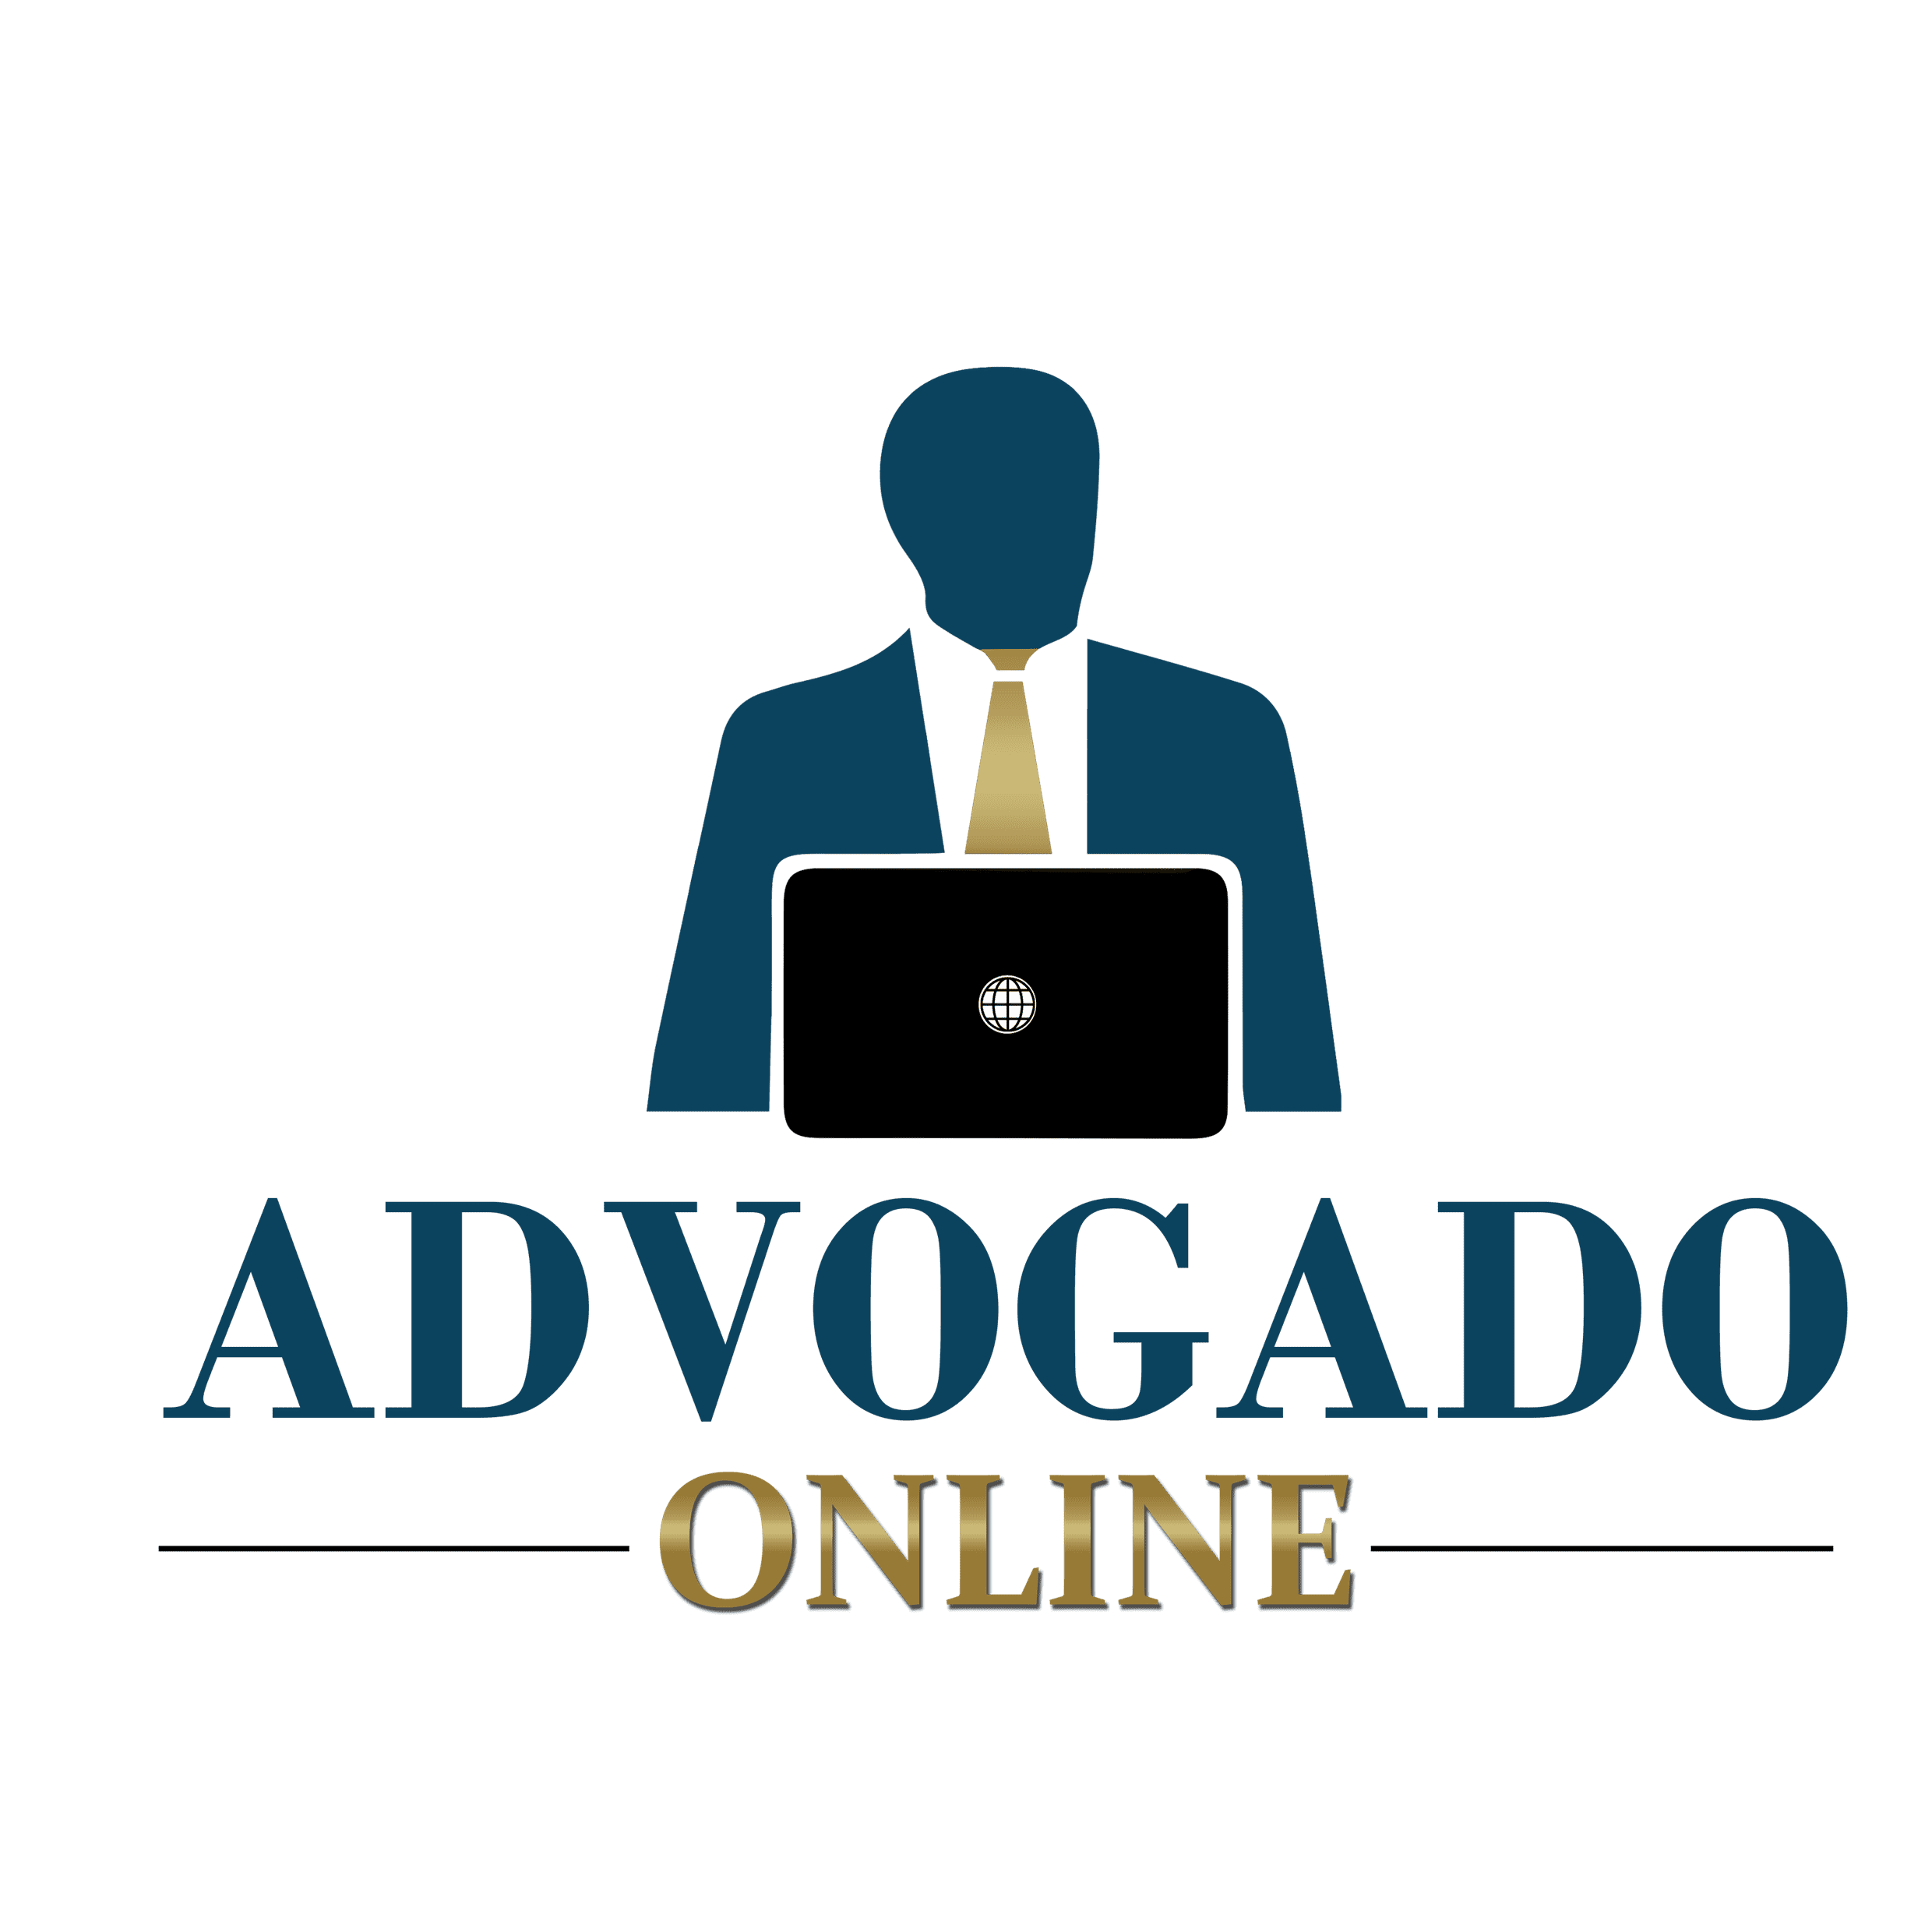 Advogado Online